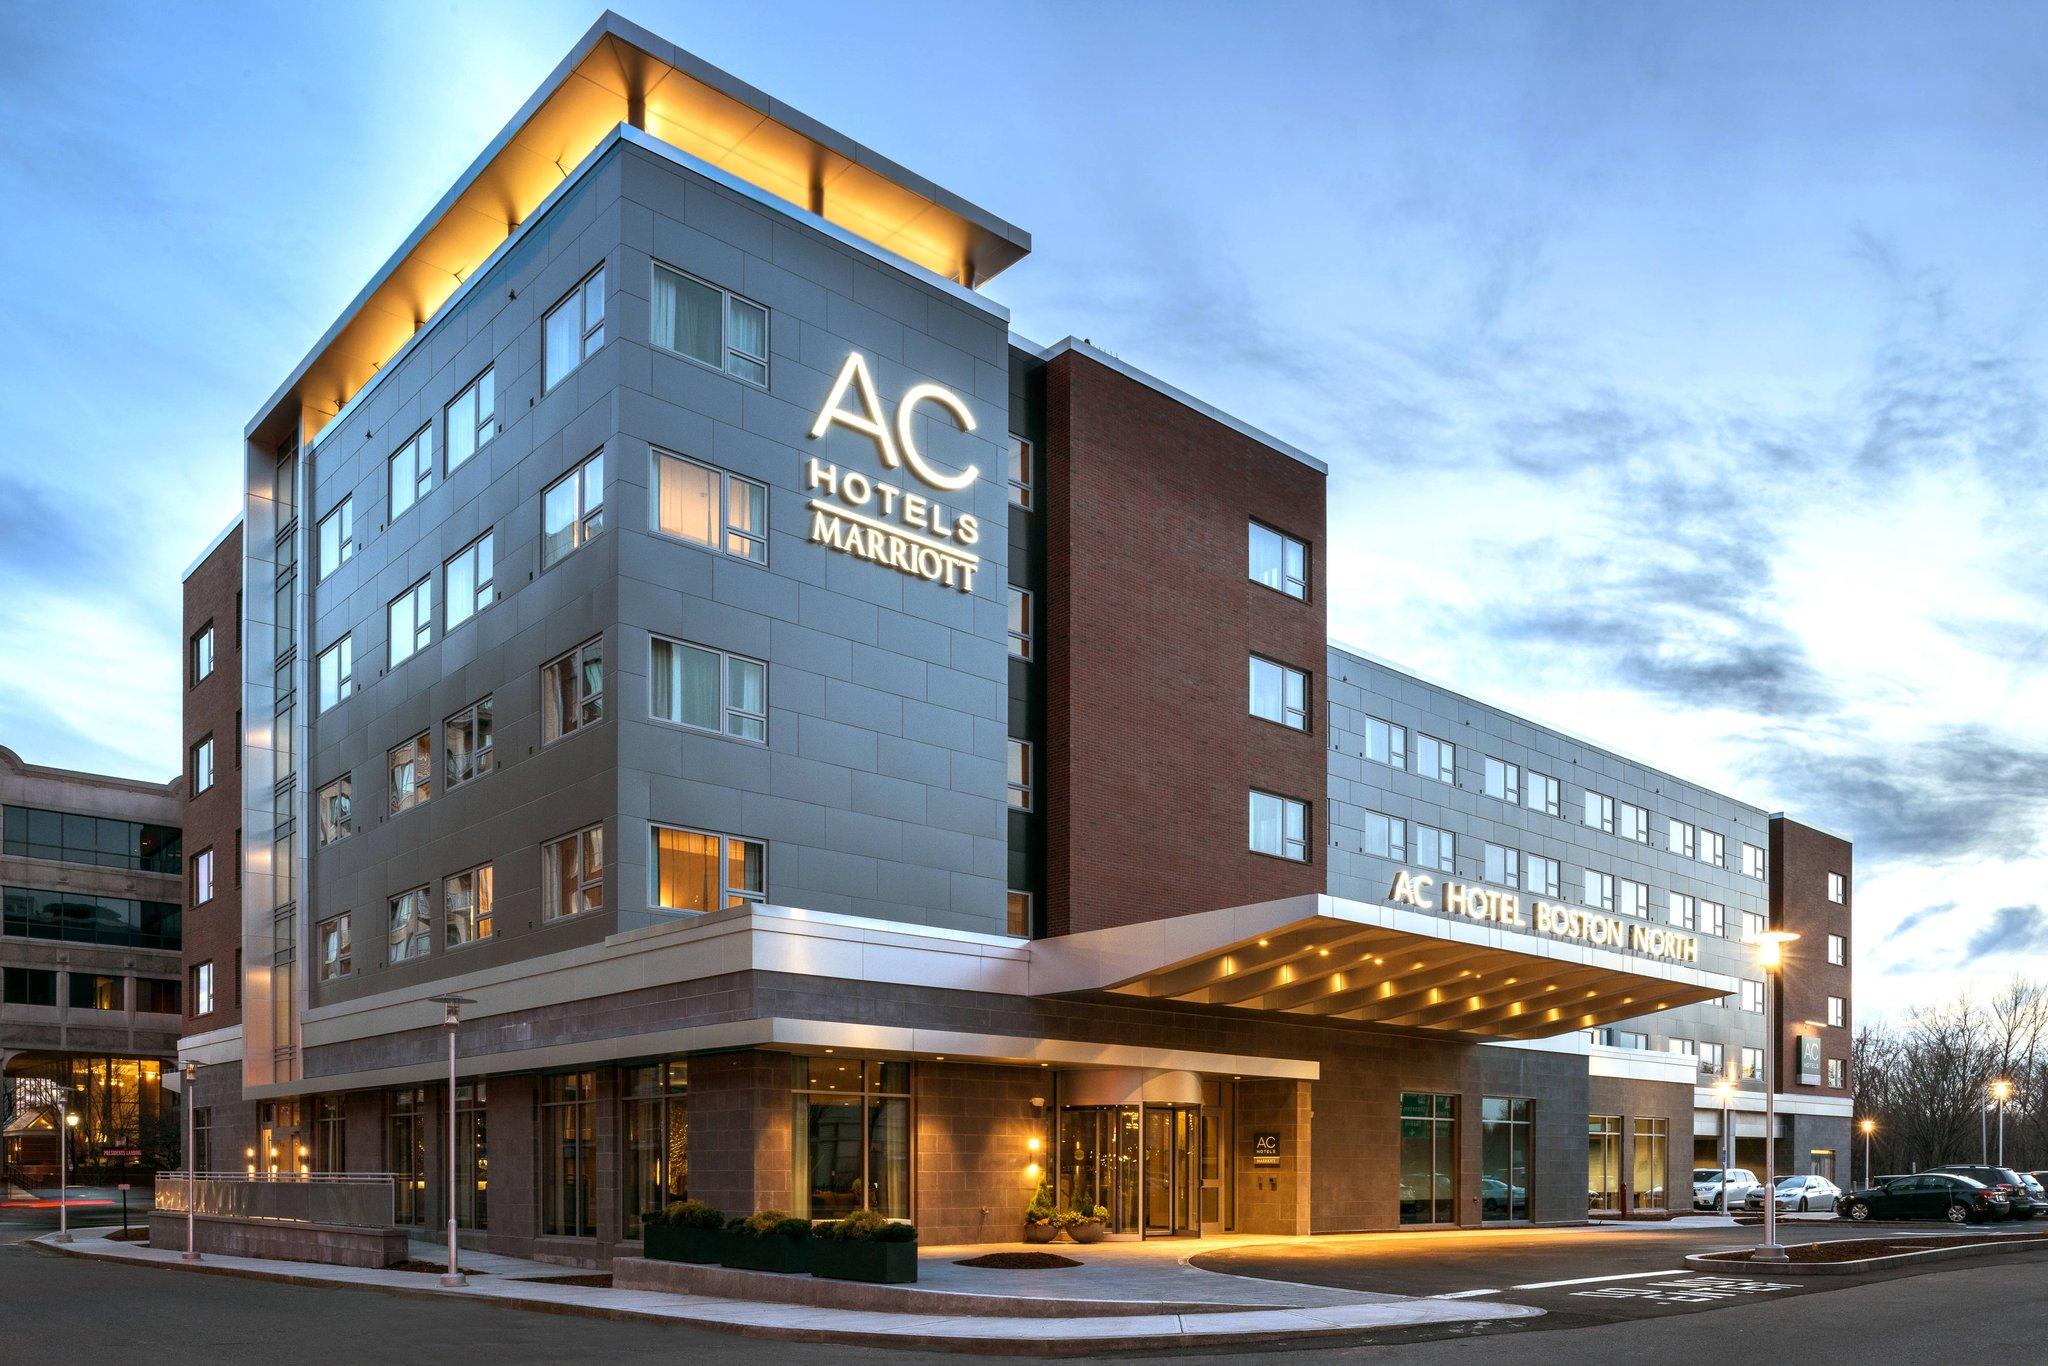 AC Hotel Boston North in Medford, MA